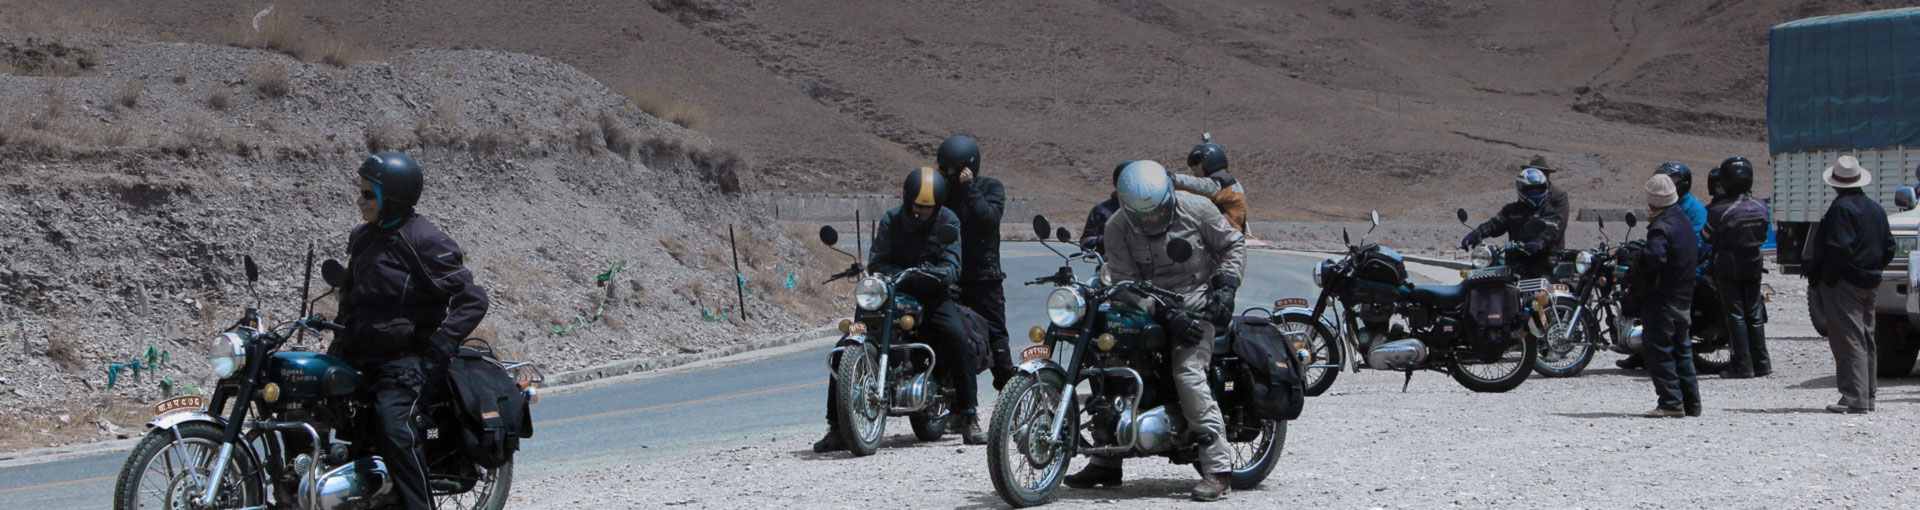 Tibet moto element film